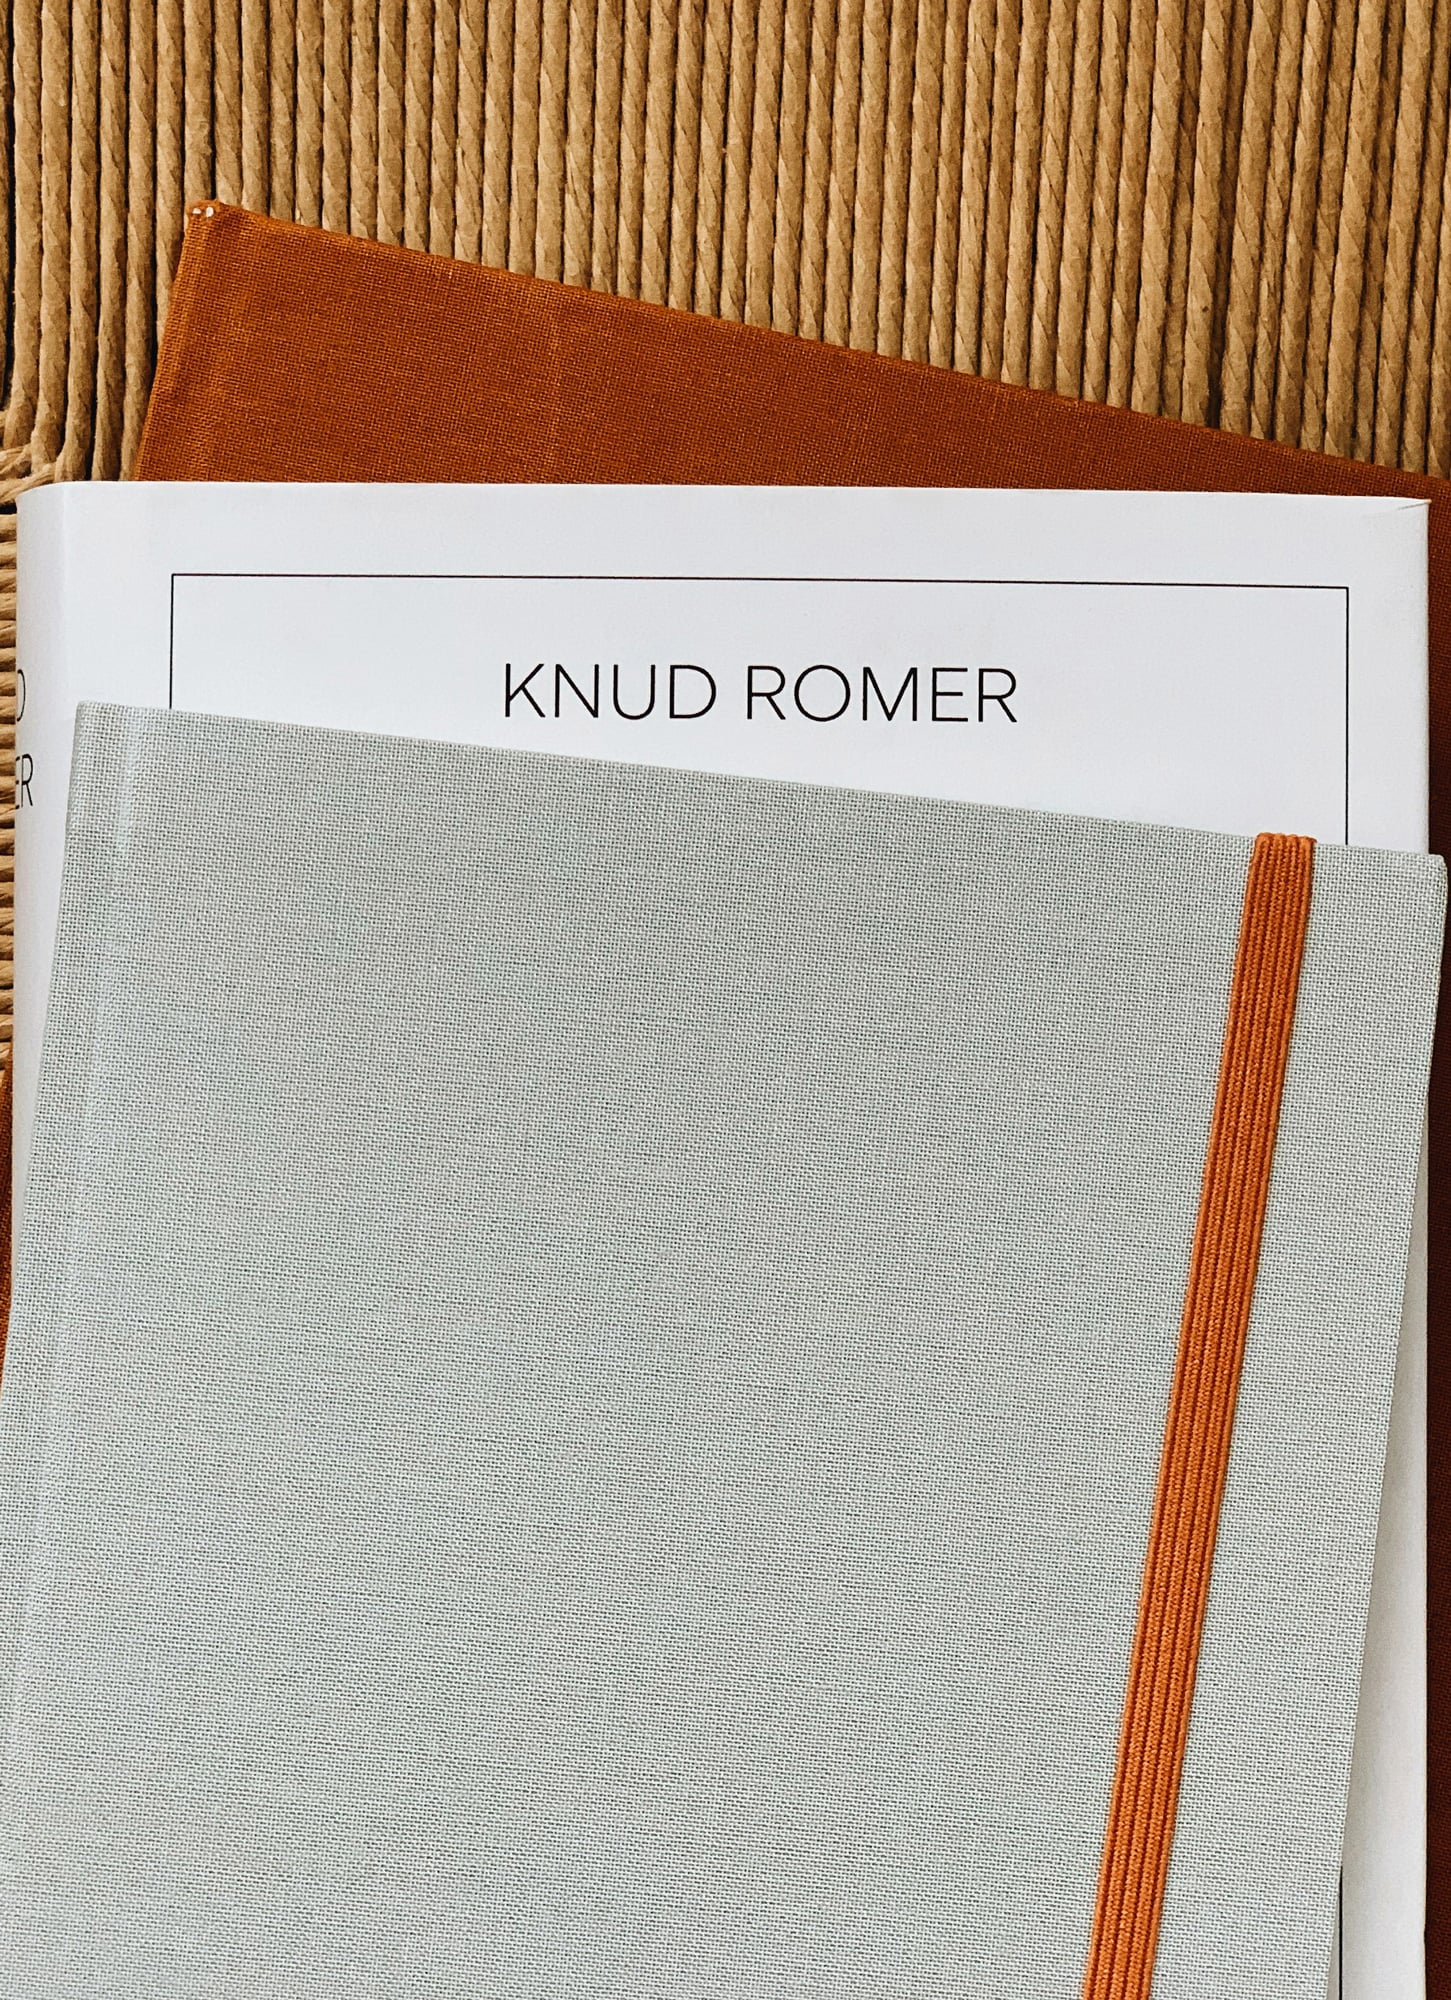 Notem - Notebook - Bea - Medium - Light Grey